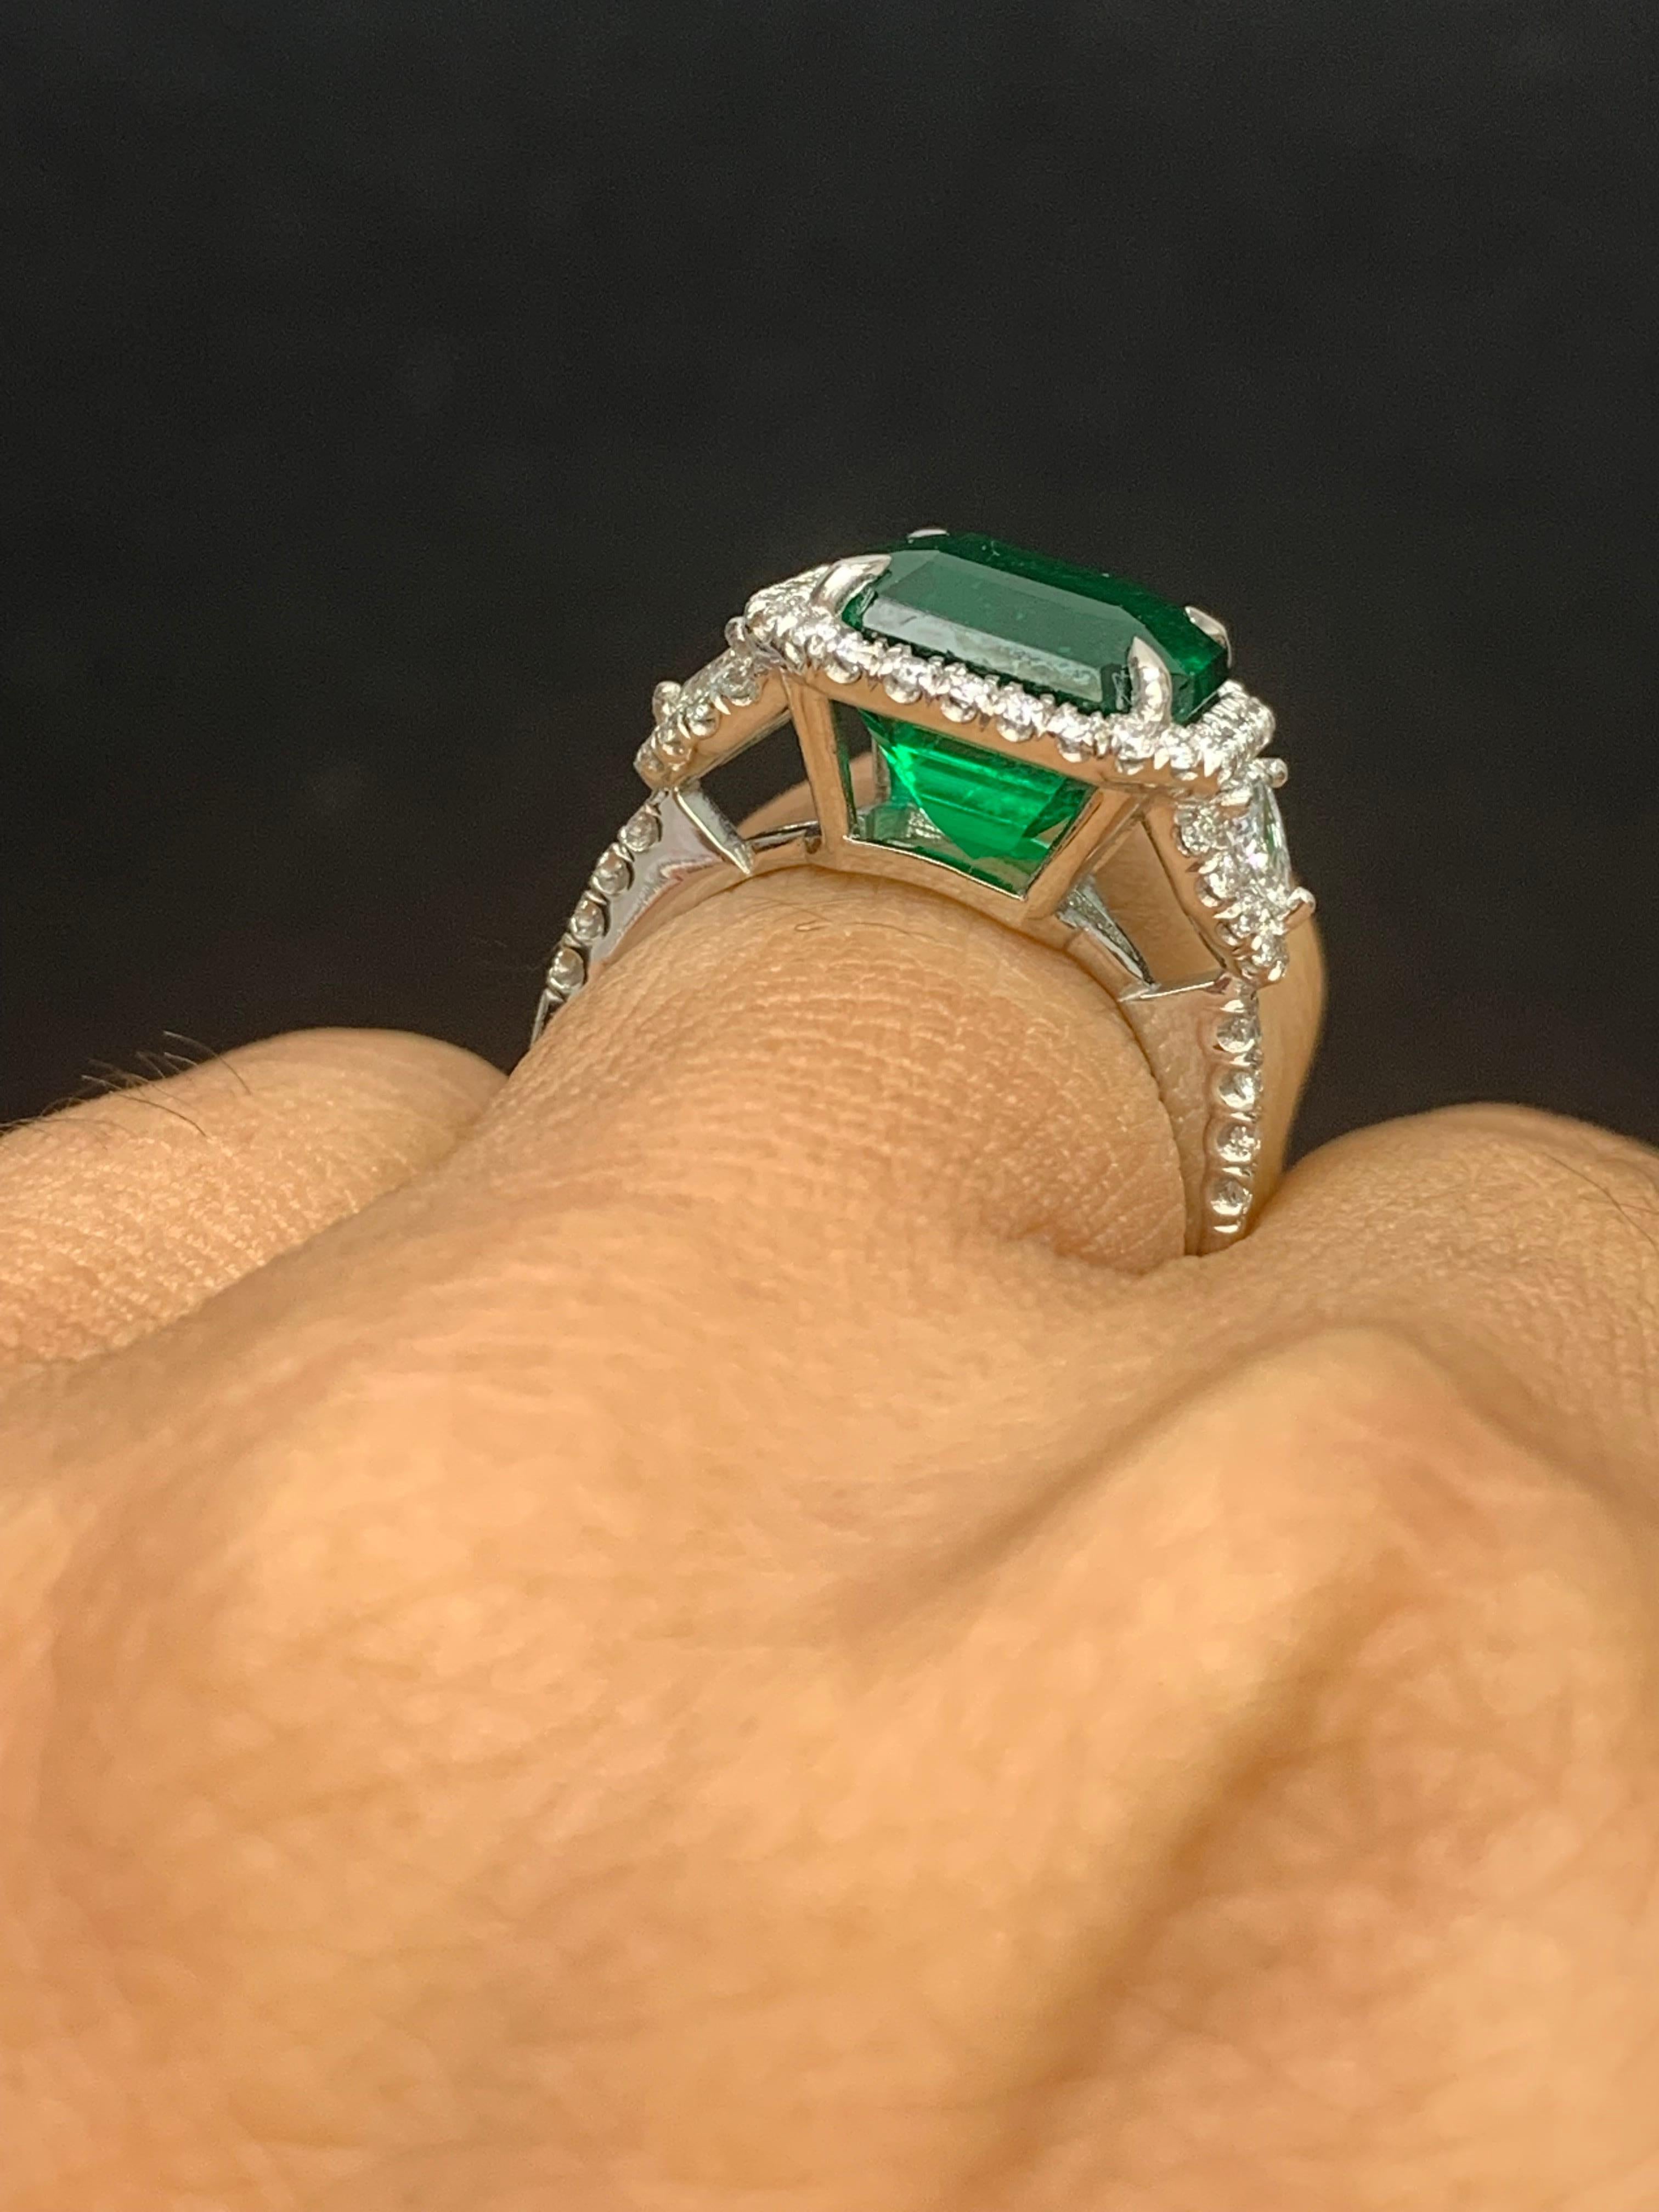 Certified 5.23 Carat Emerald Cut Emerald Diamond 3 Stone Halo Ring in Platinum For Sale 3